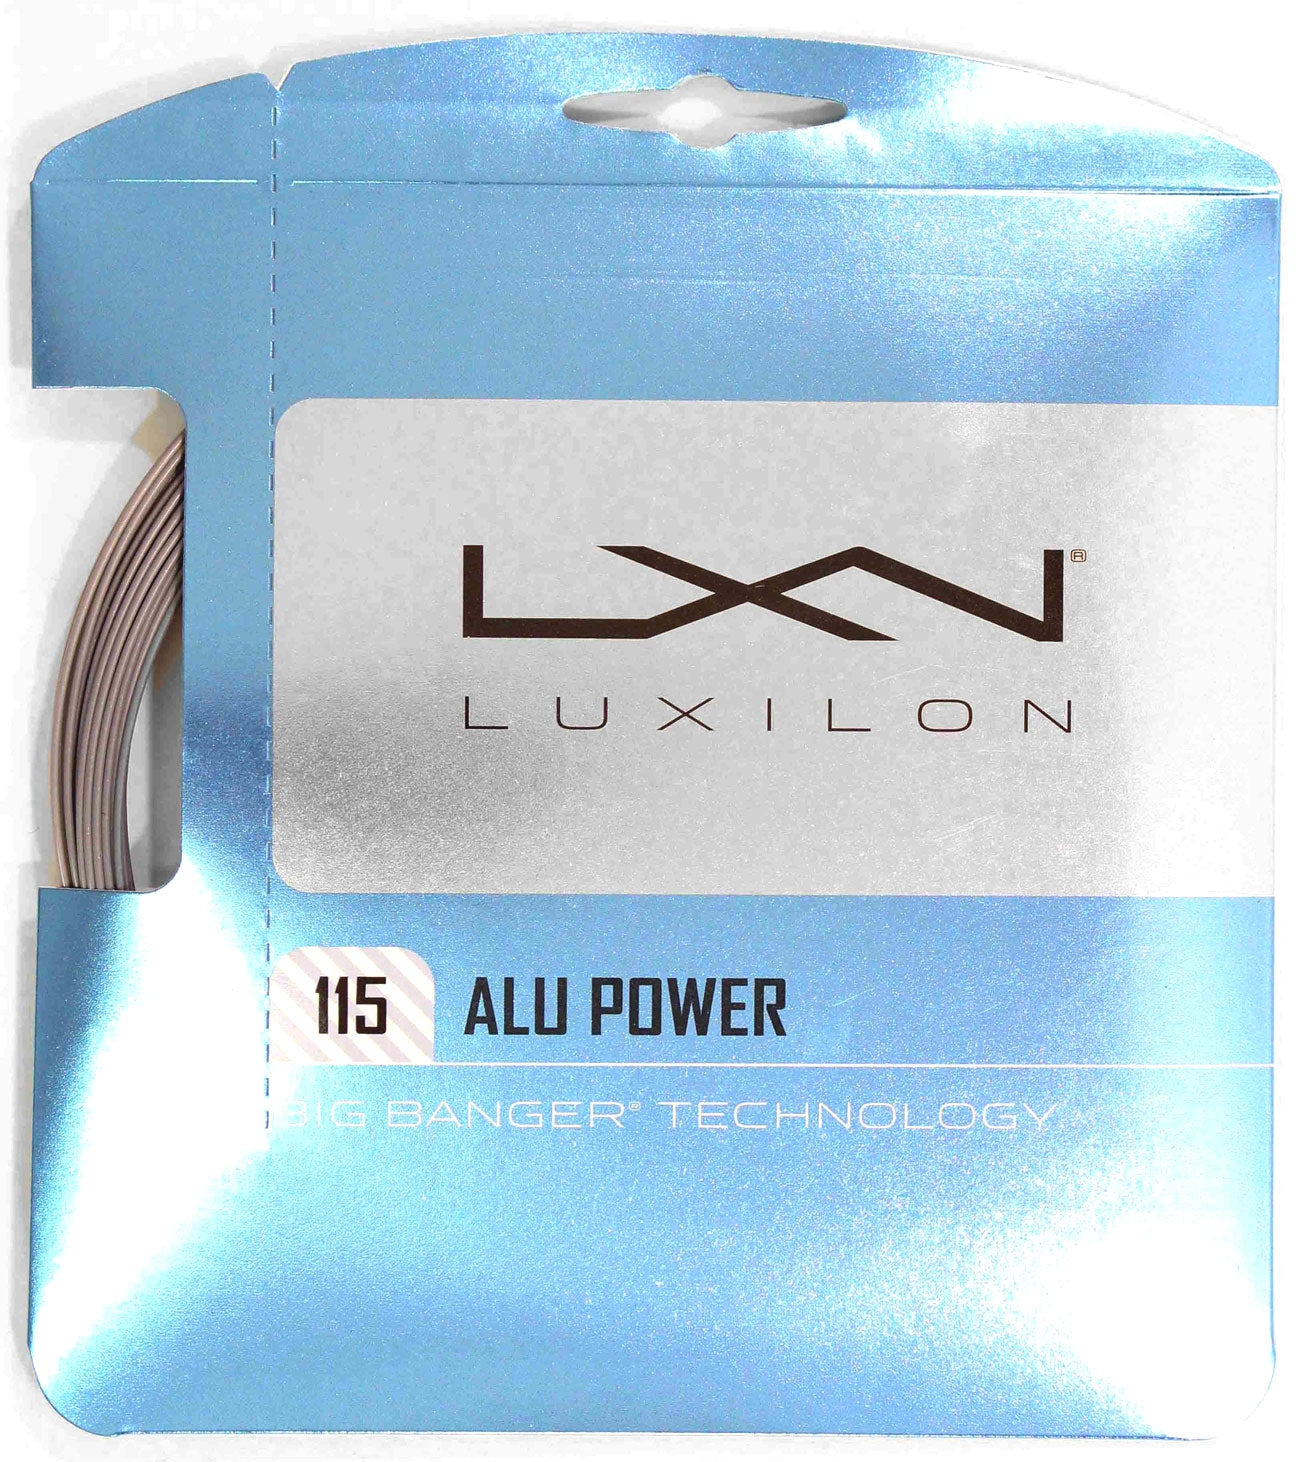 Luxilon Big Banger Alu Power 115 Silver